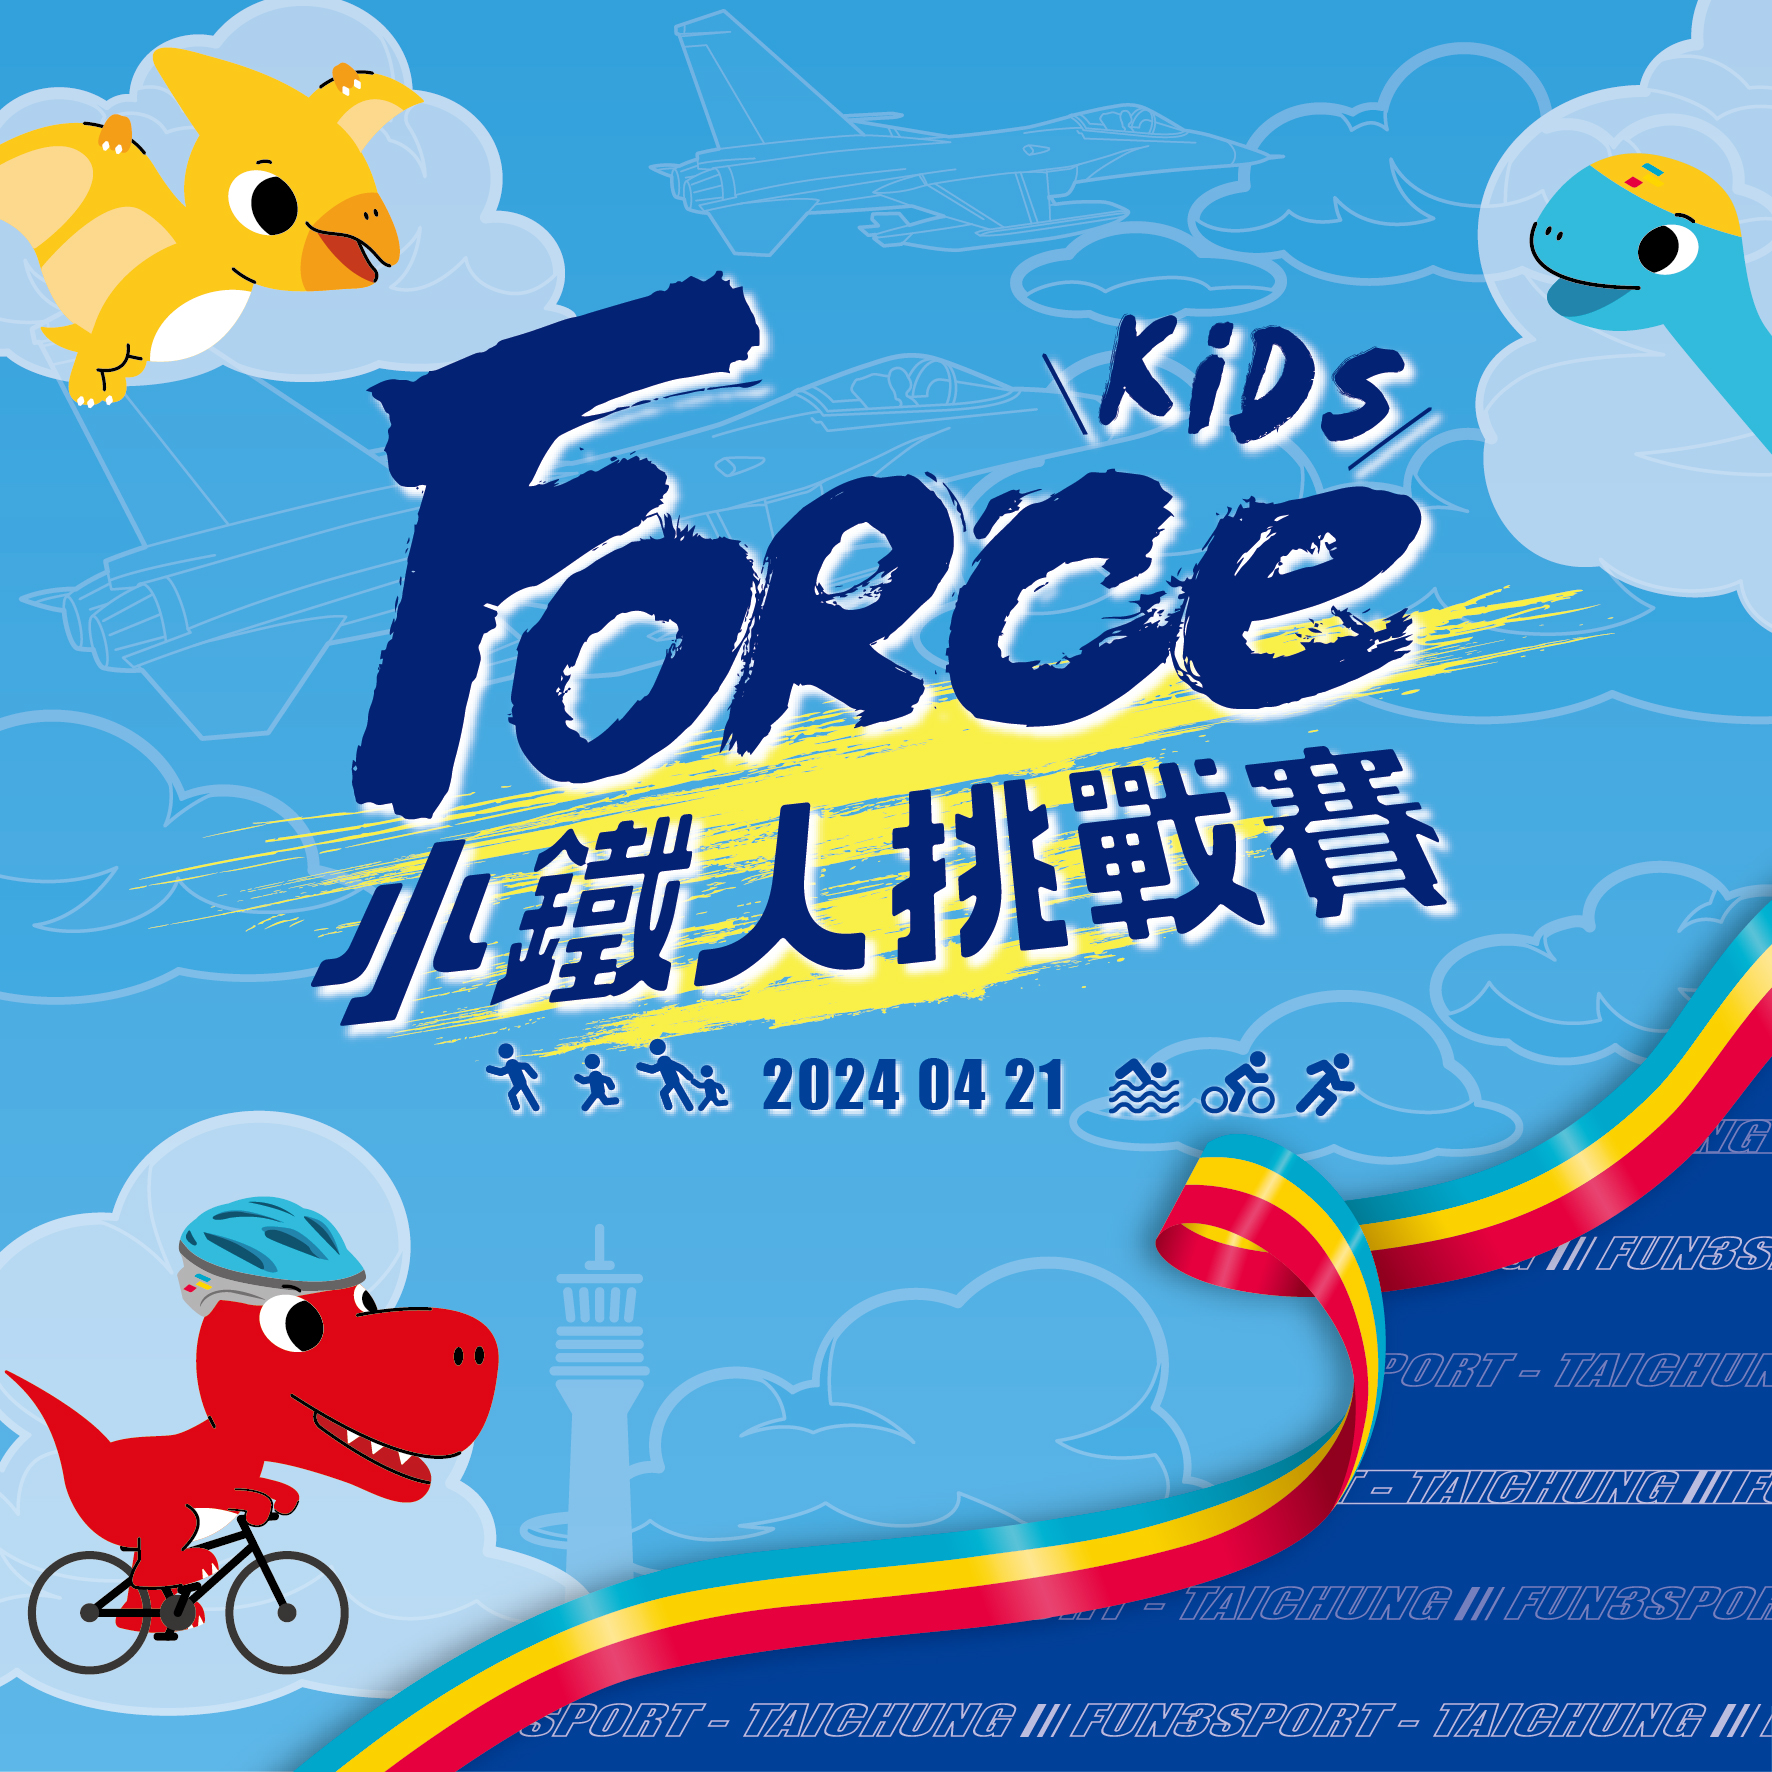 ForceKids 小鐵人挑戰賽-台中翔園站 Logo